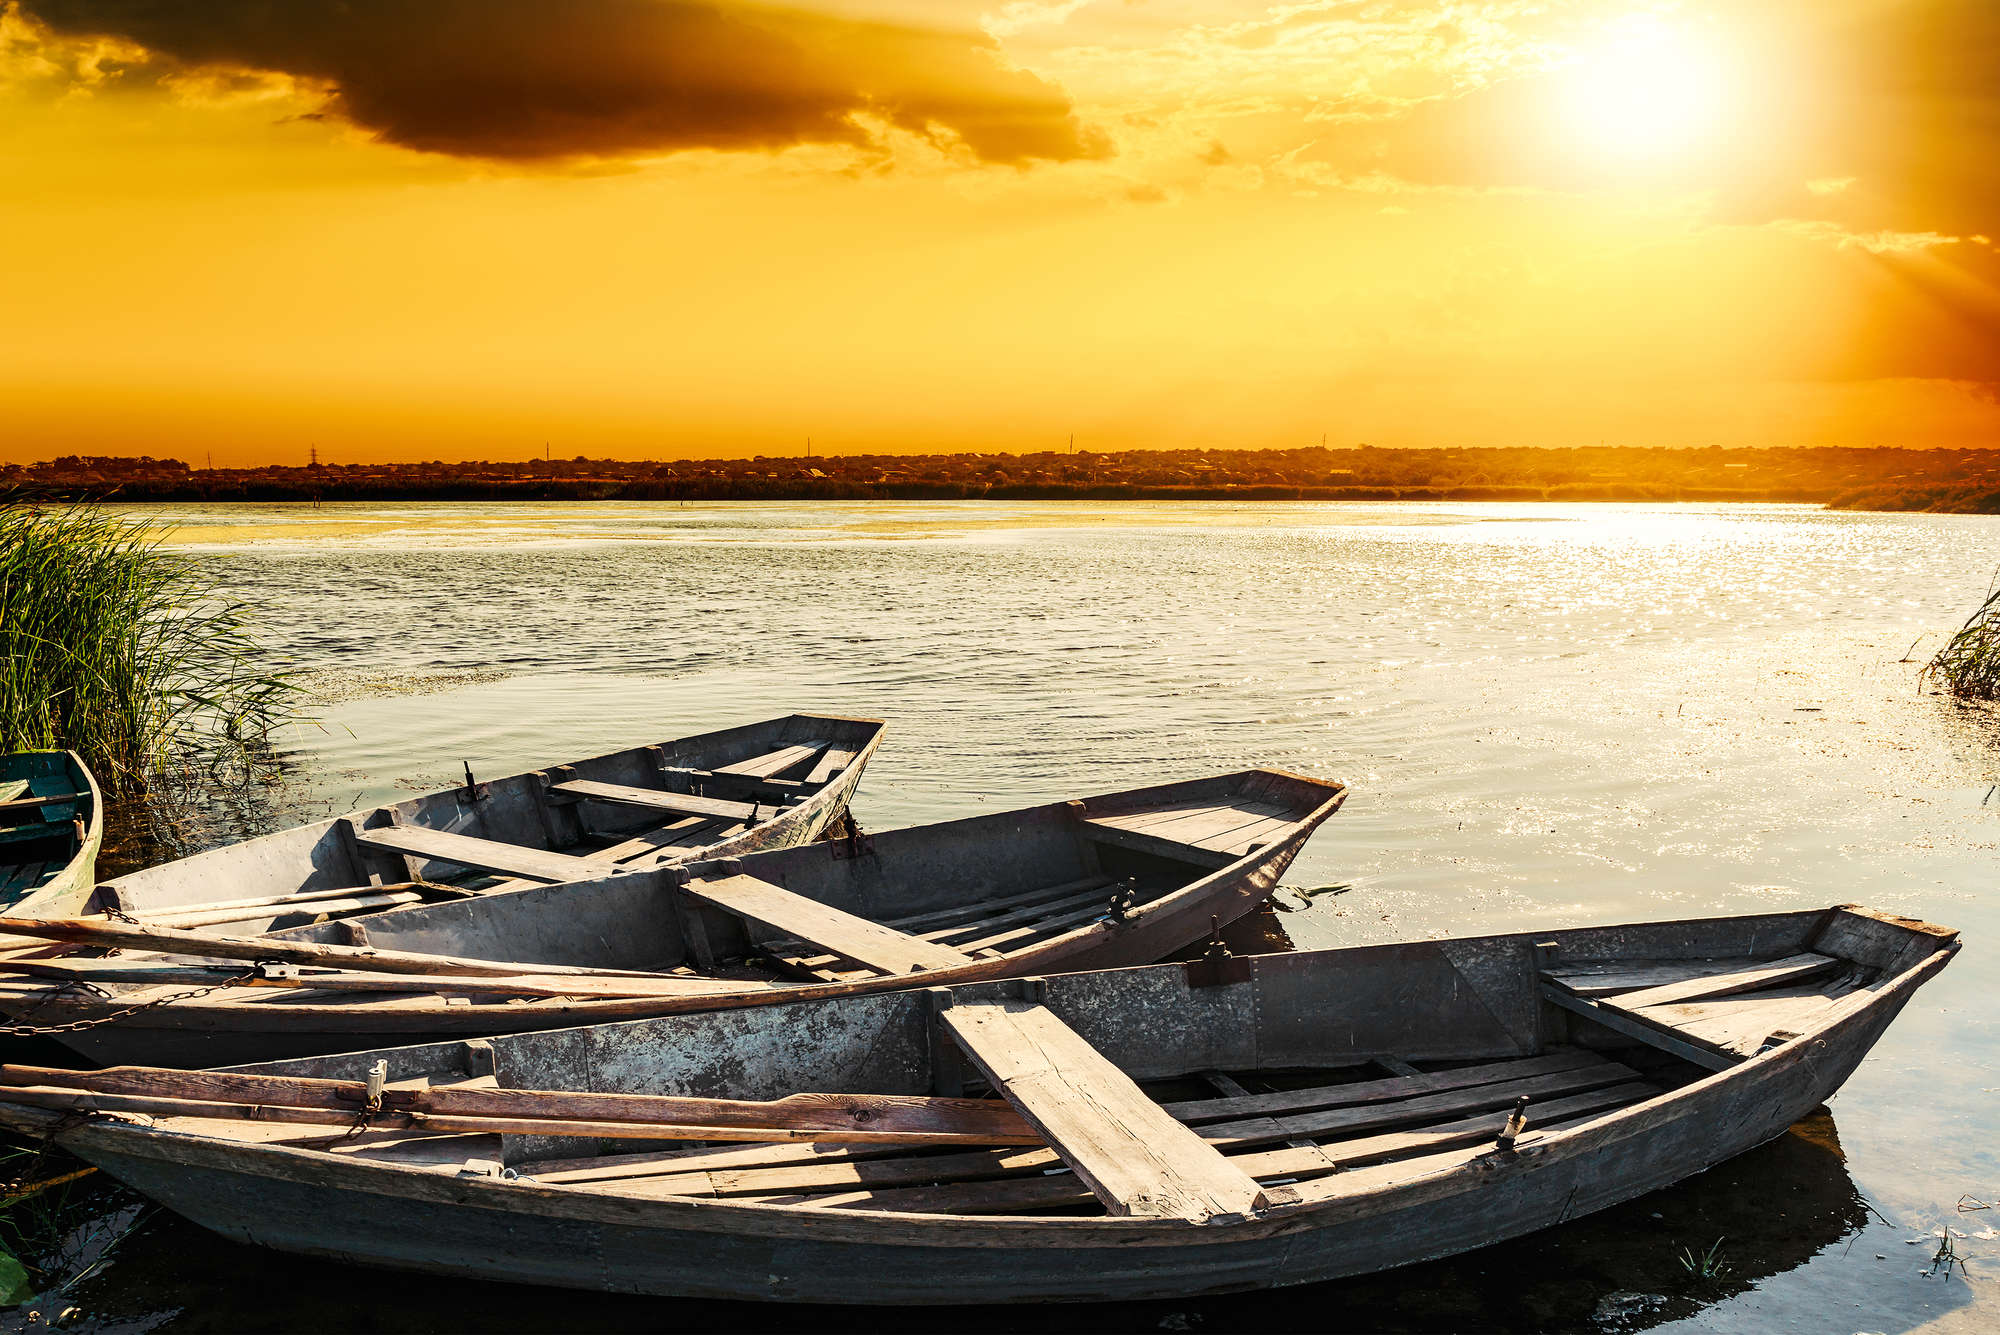             Natur Fototapete Holzboote am See auf Premium Glattvlies
        